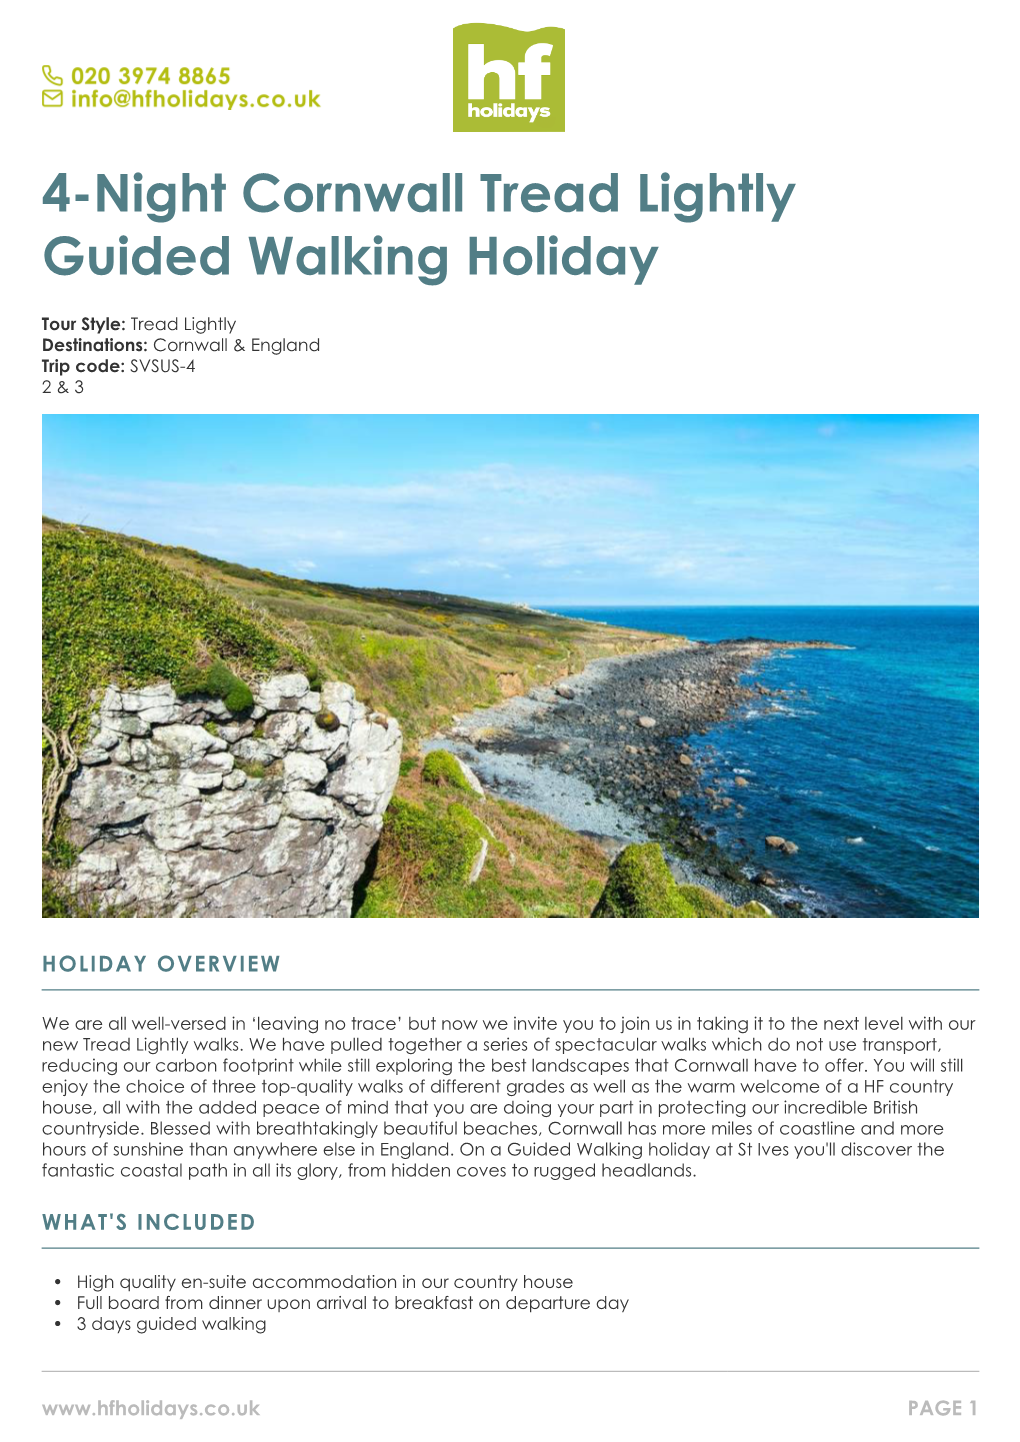 4-Night Cornwall Tread Lightly Guided Walking Holiday